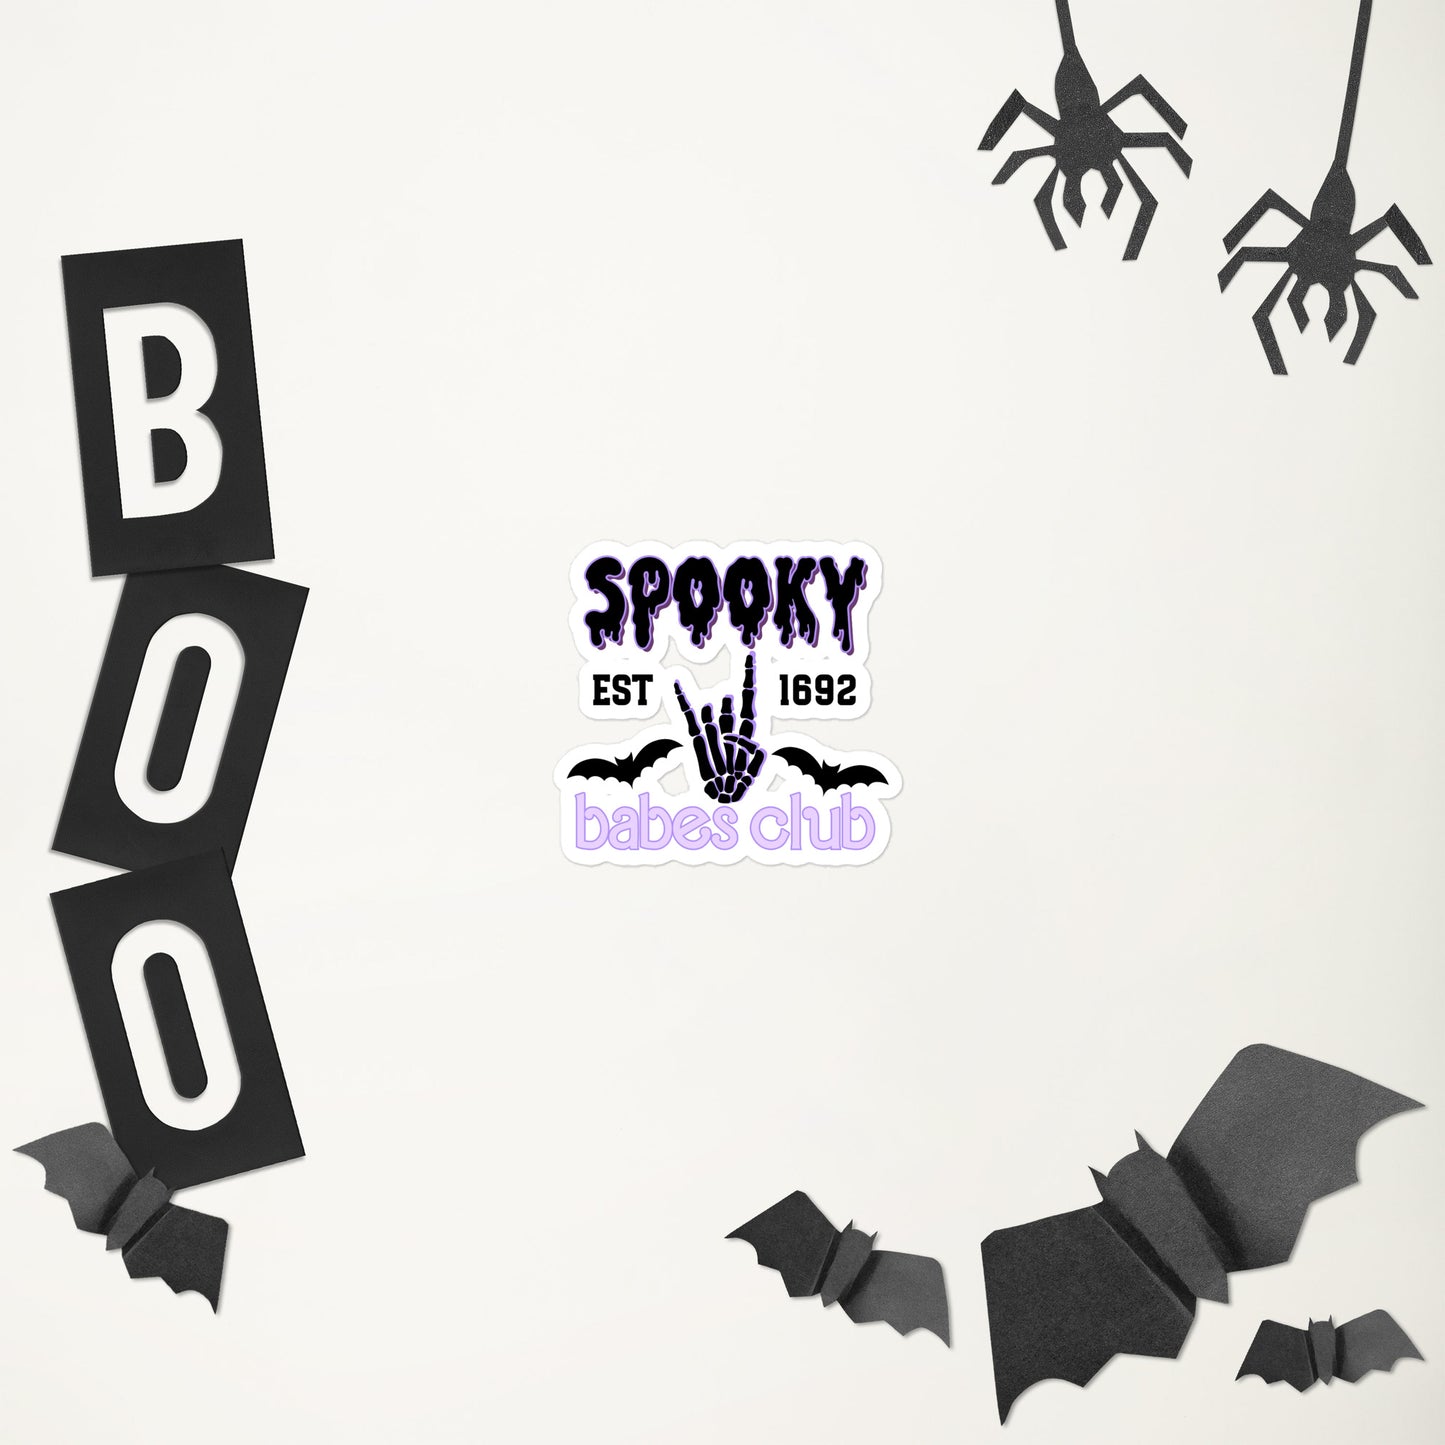 Spooky Bae Club Stickers